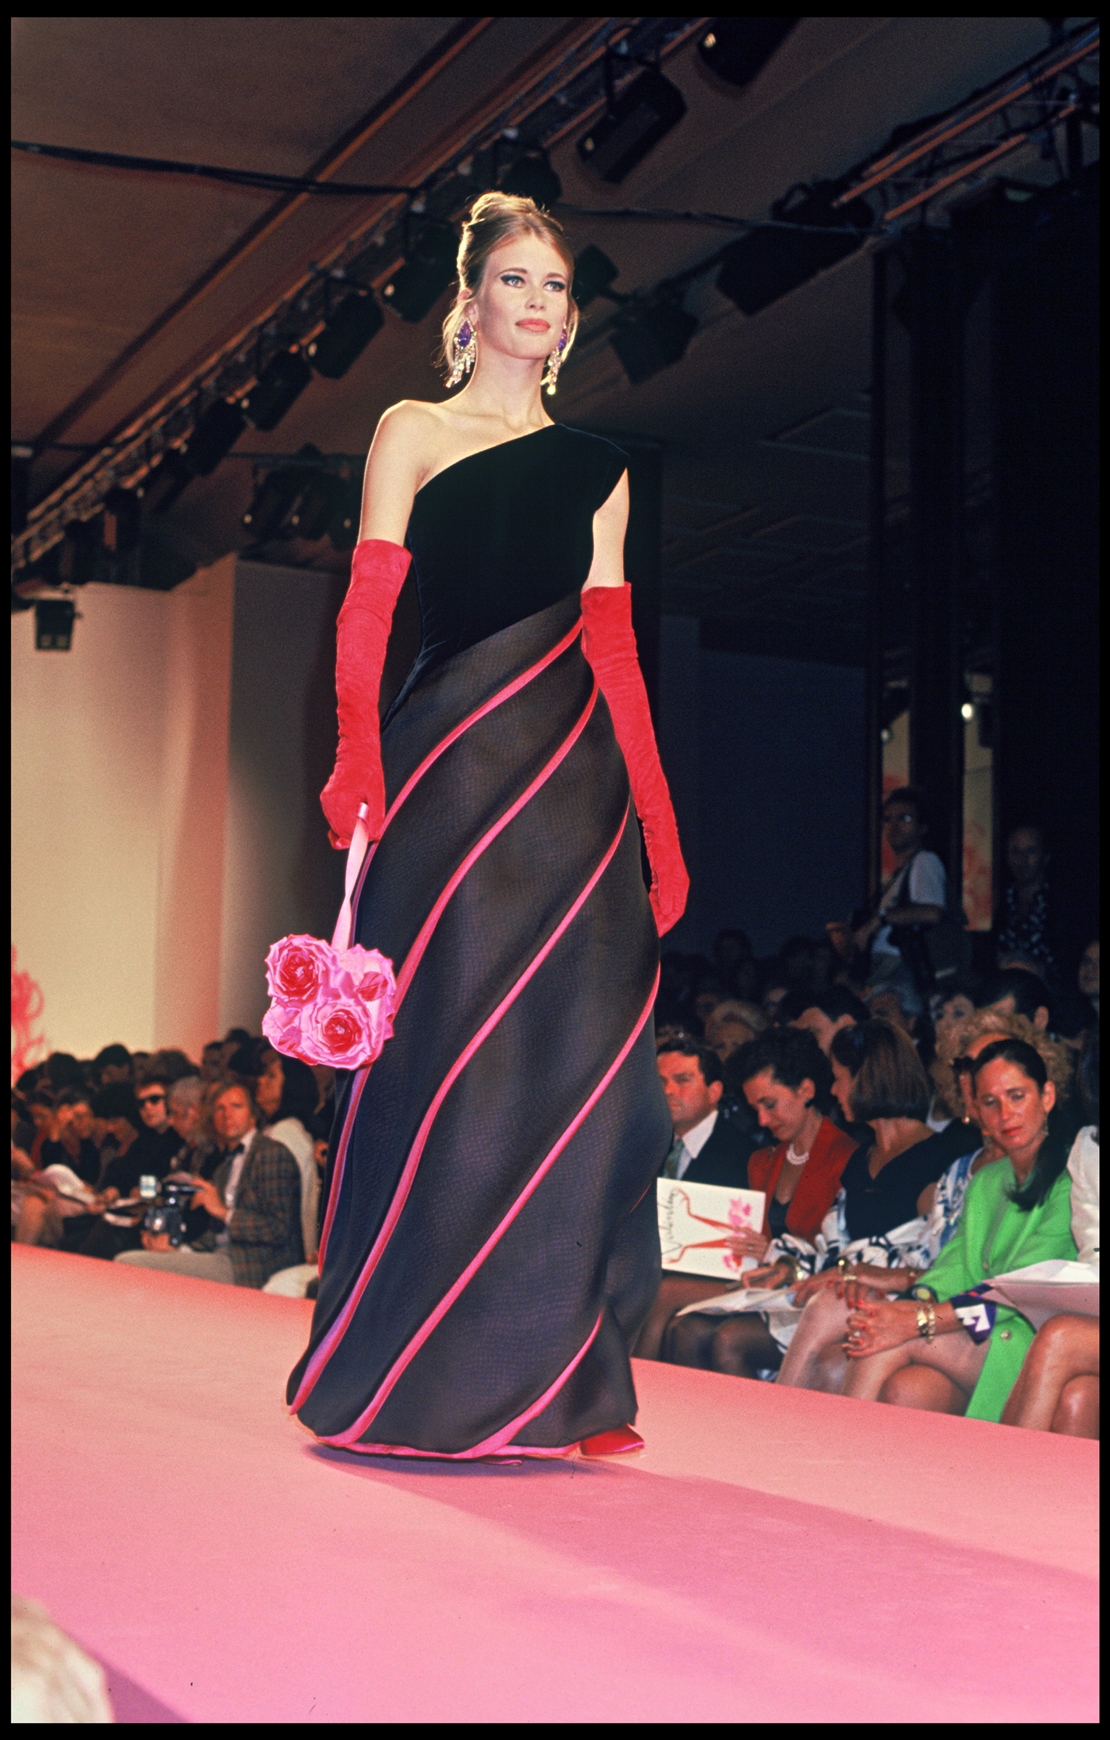 Louis Féraud Haute Couture A/W 1991-2